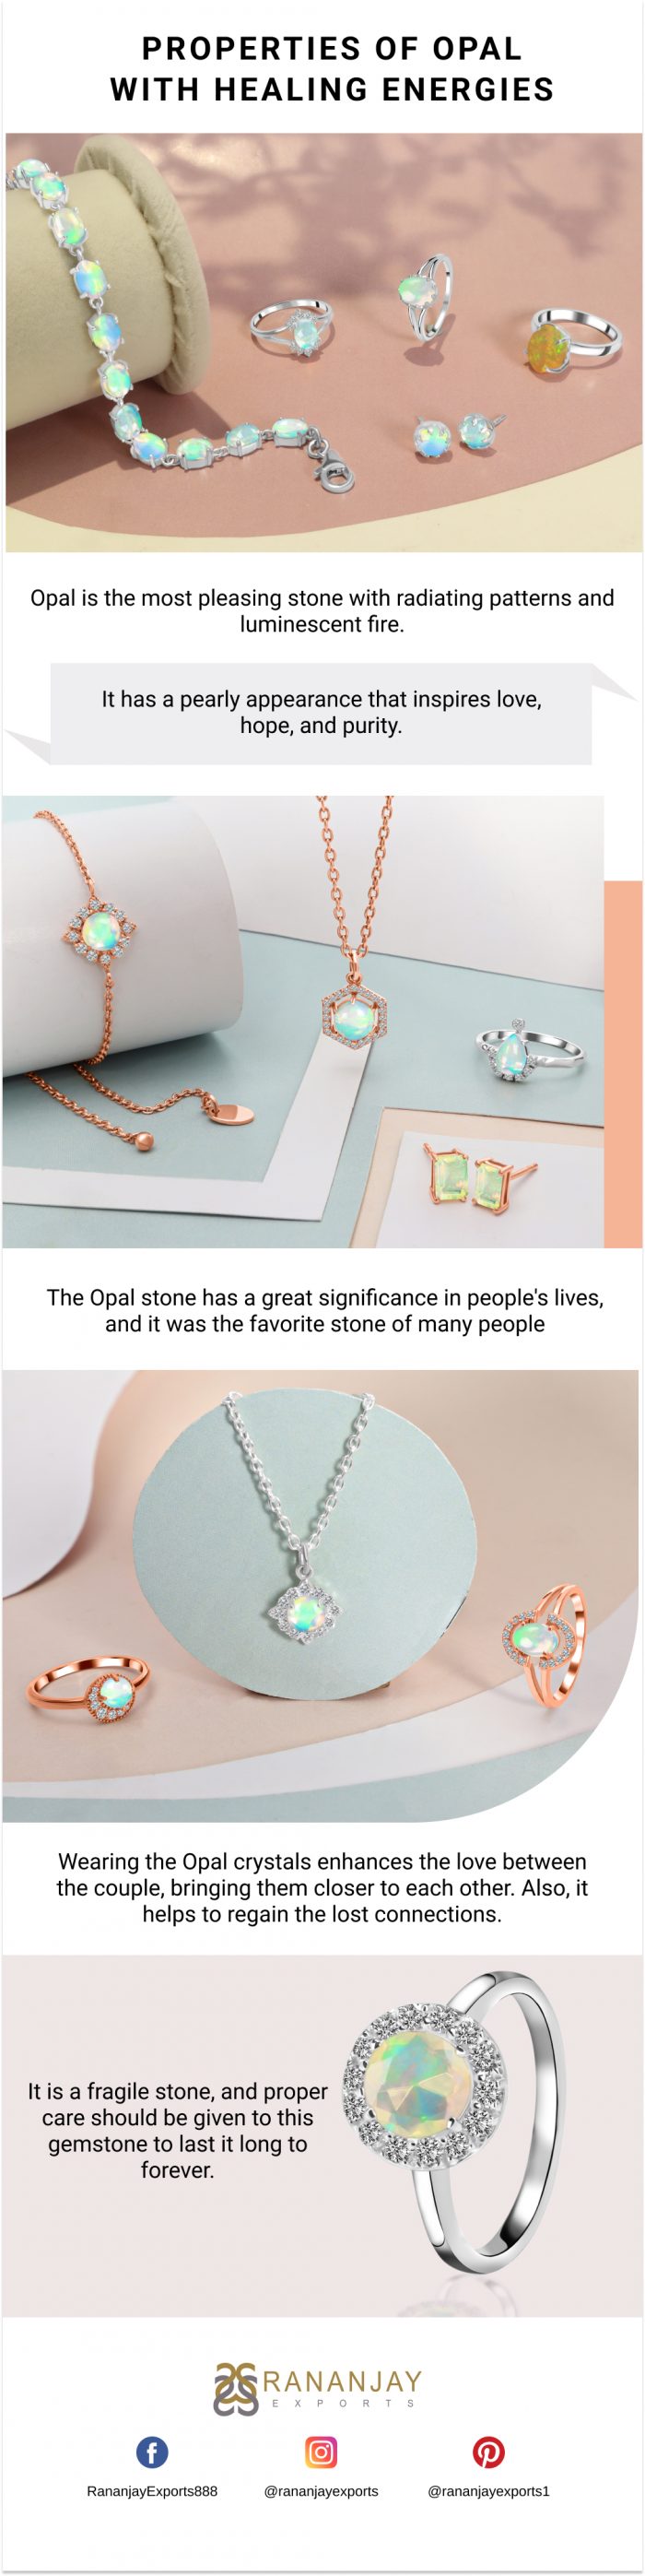 Properties of Opal With Healing Energies